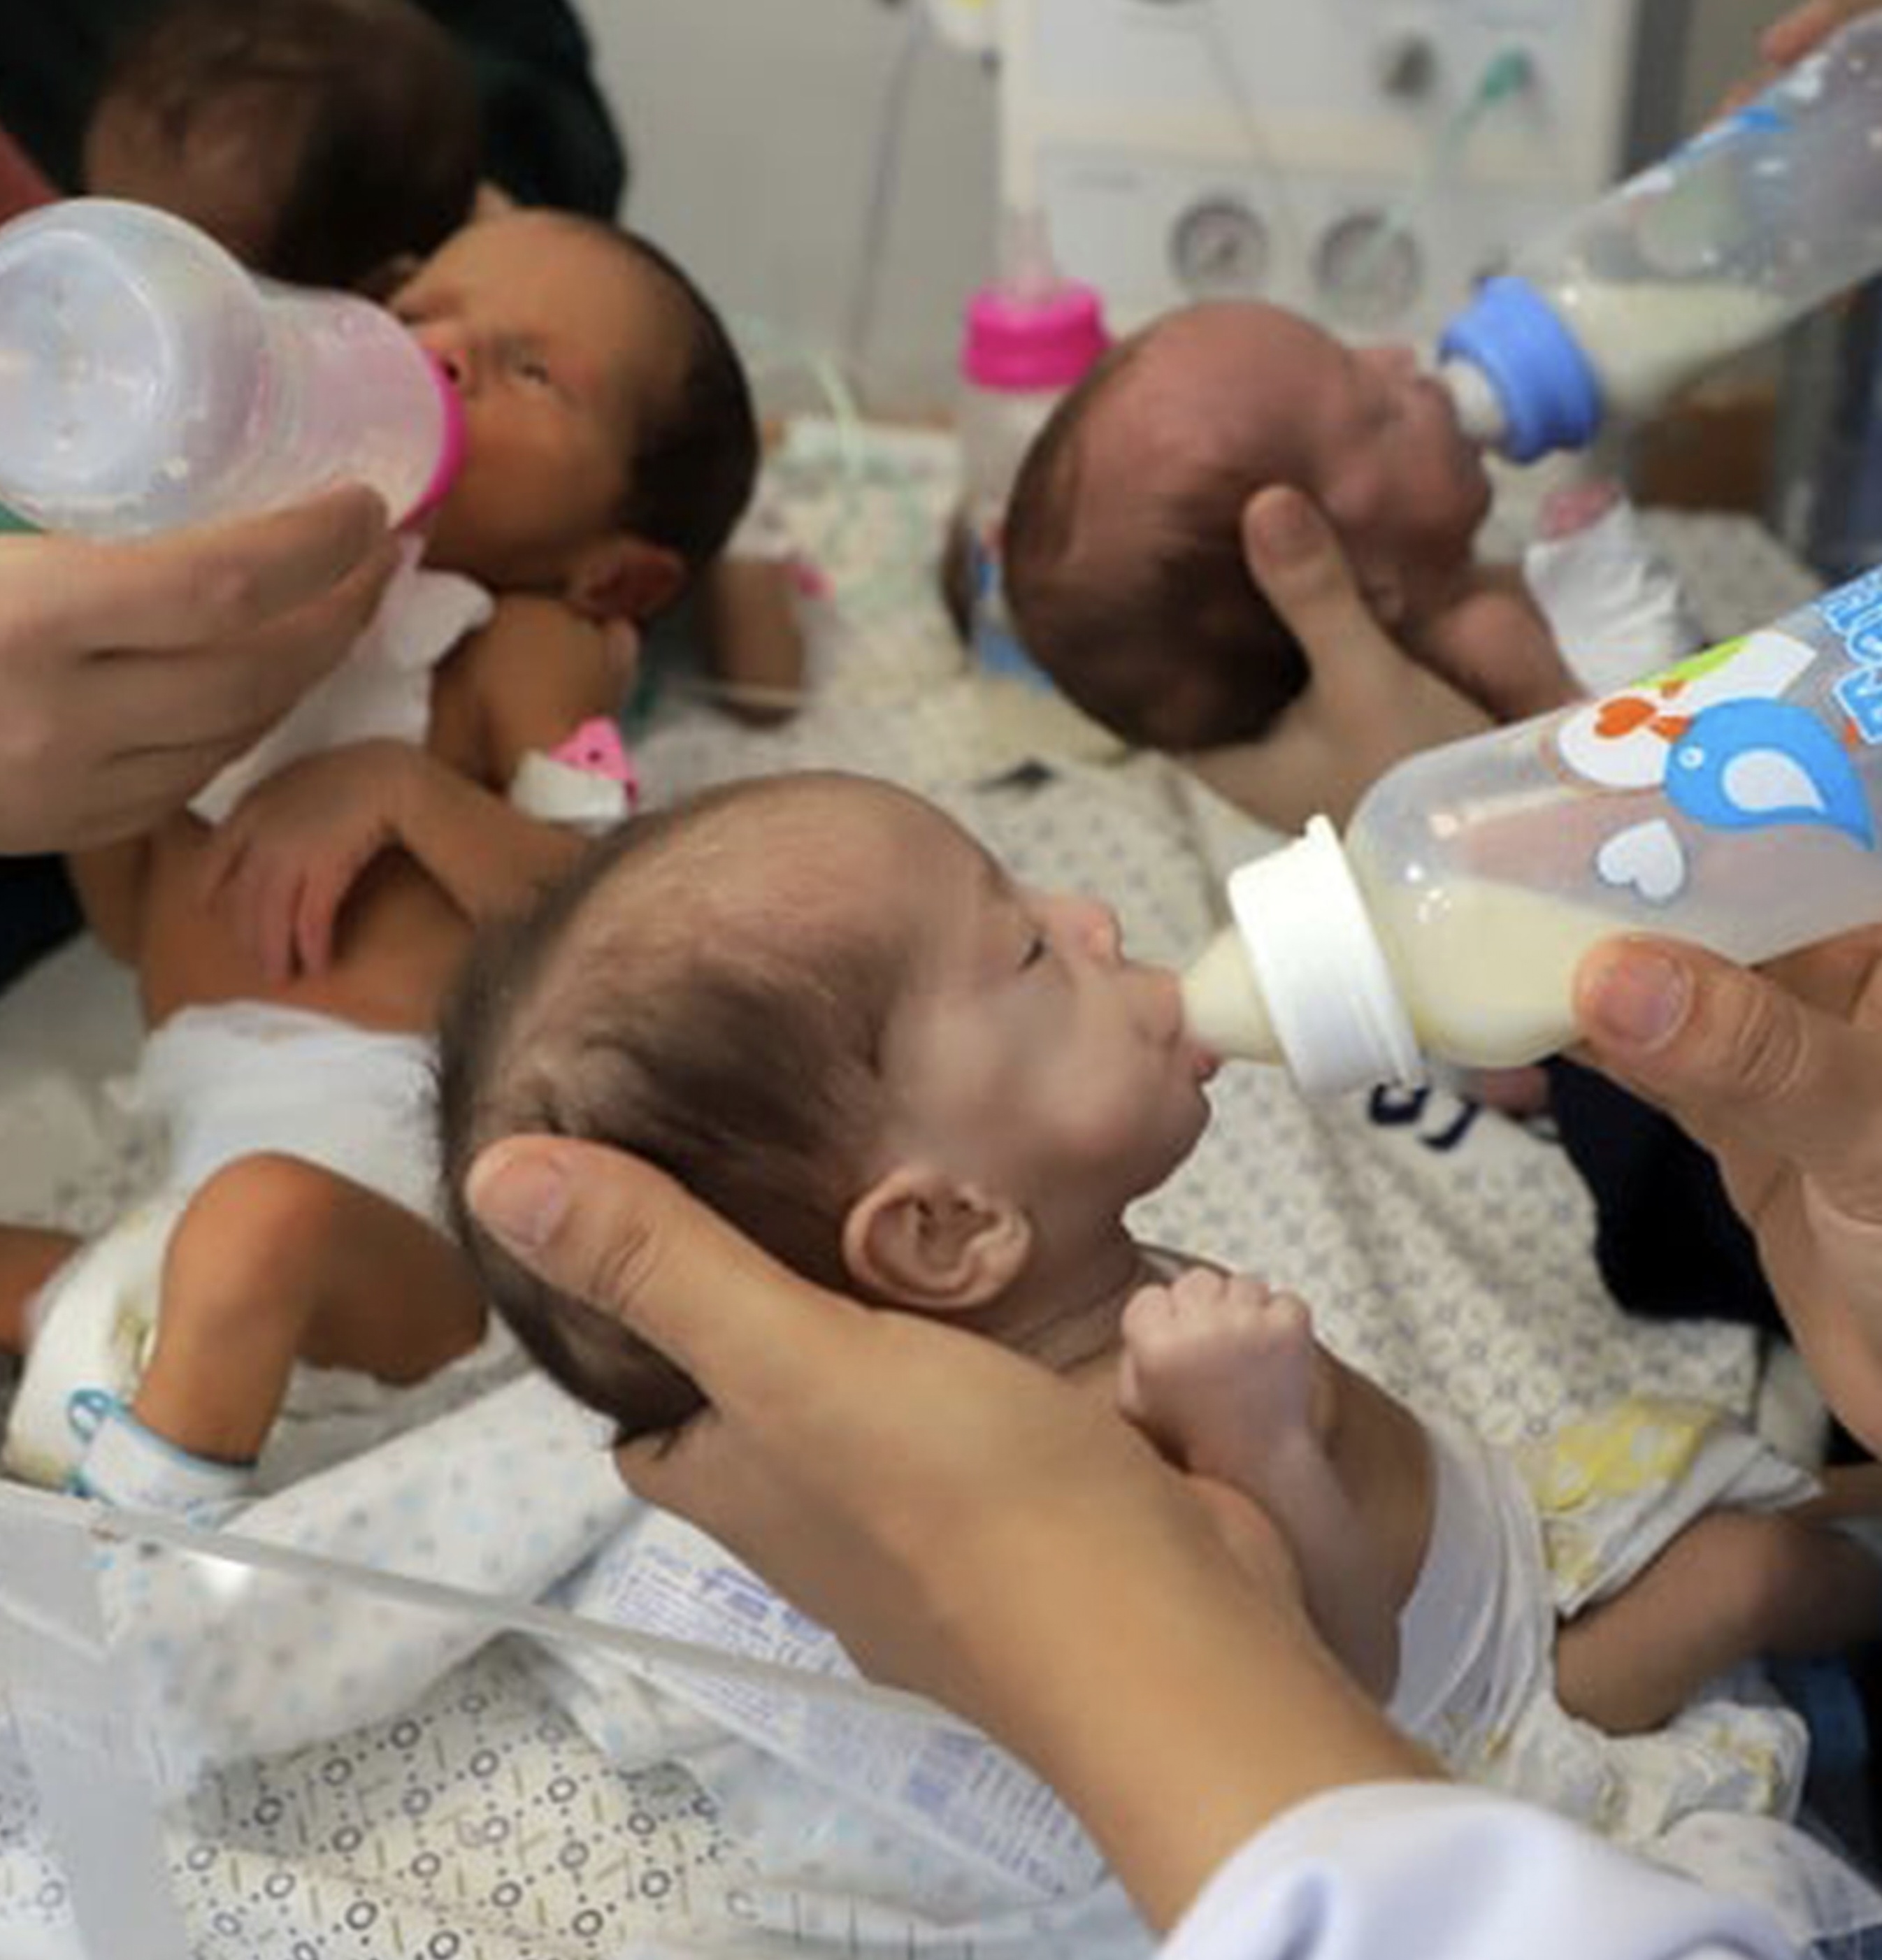 Lima Bayi Prematur di RS Al-Nashr Dilaporkan Tewas Membusuk, Orang Tua dan Petugas Dipaksa Mengungsi